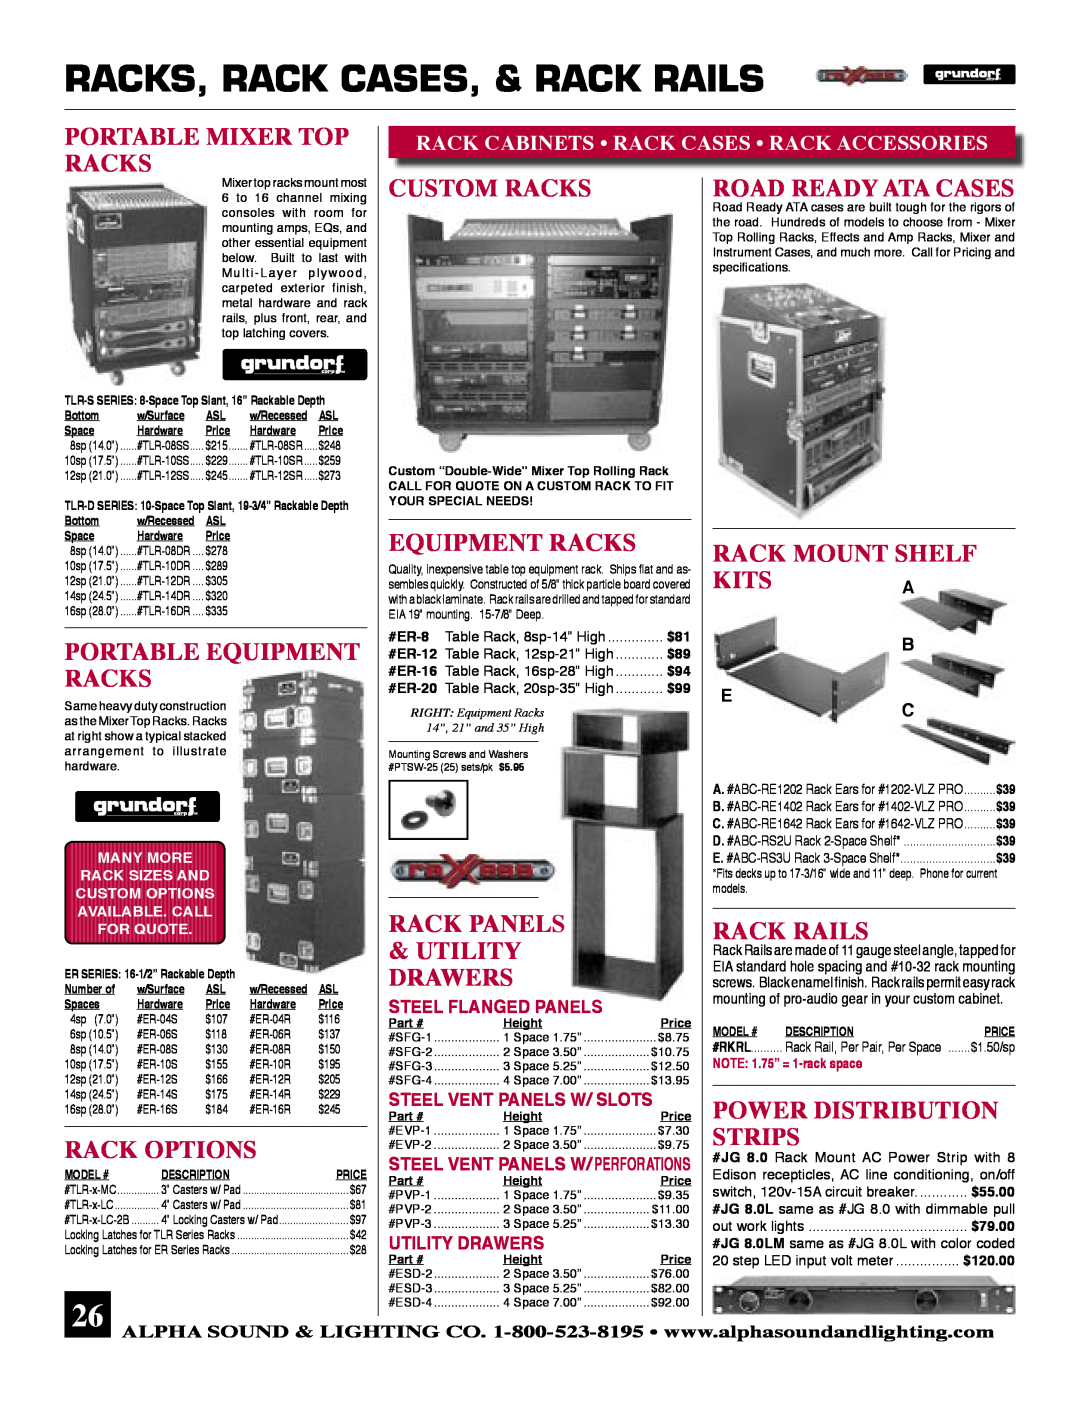 Ultimate Products JRX118S Racks, Rack Cases, & Rack Rails, Portable Mixer Top, Road Ready Ata Cases, Equipment Racks 